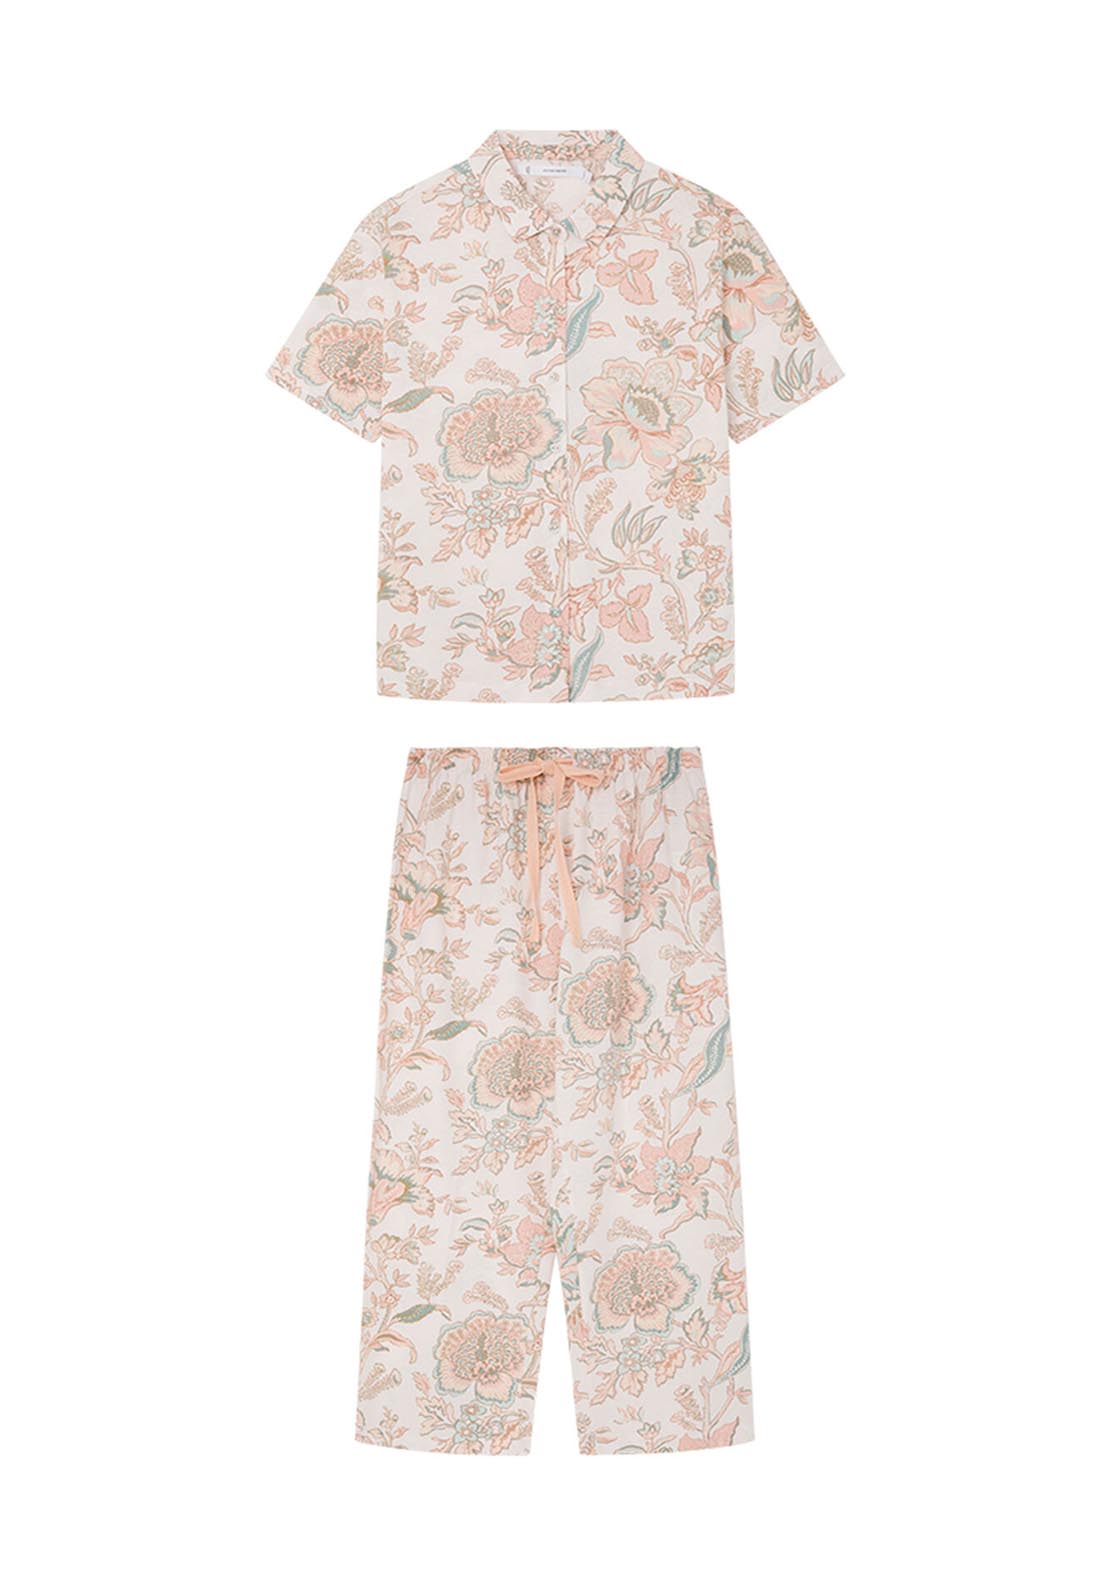 Womens Secret Classic floral print pyjamas in 100% cotton - White 7 Shaws Department Stores